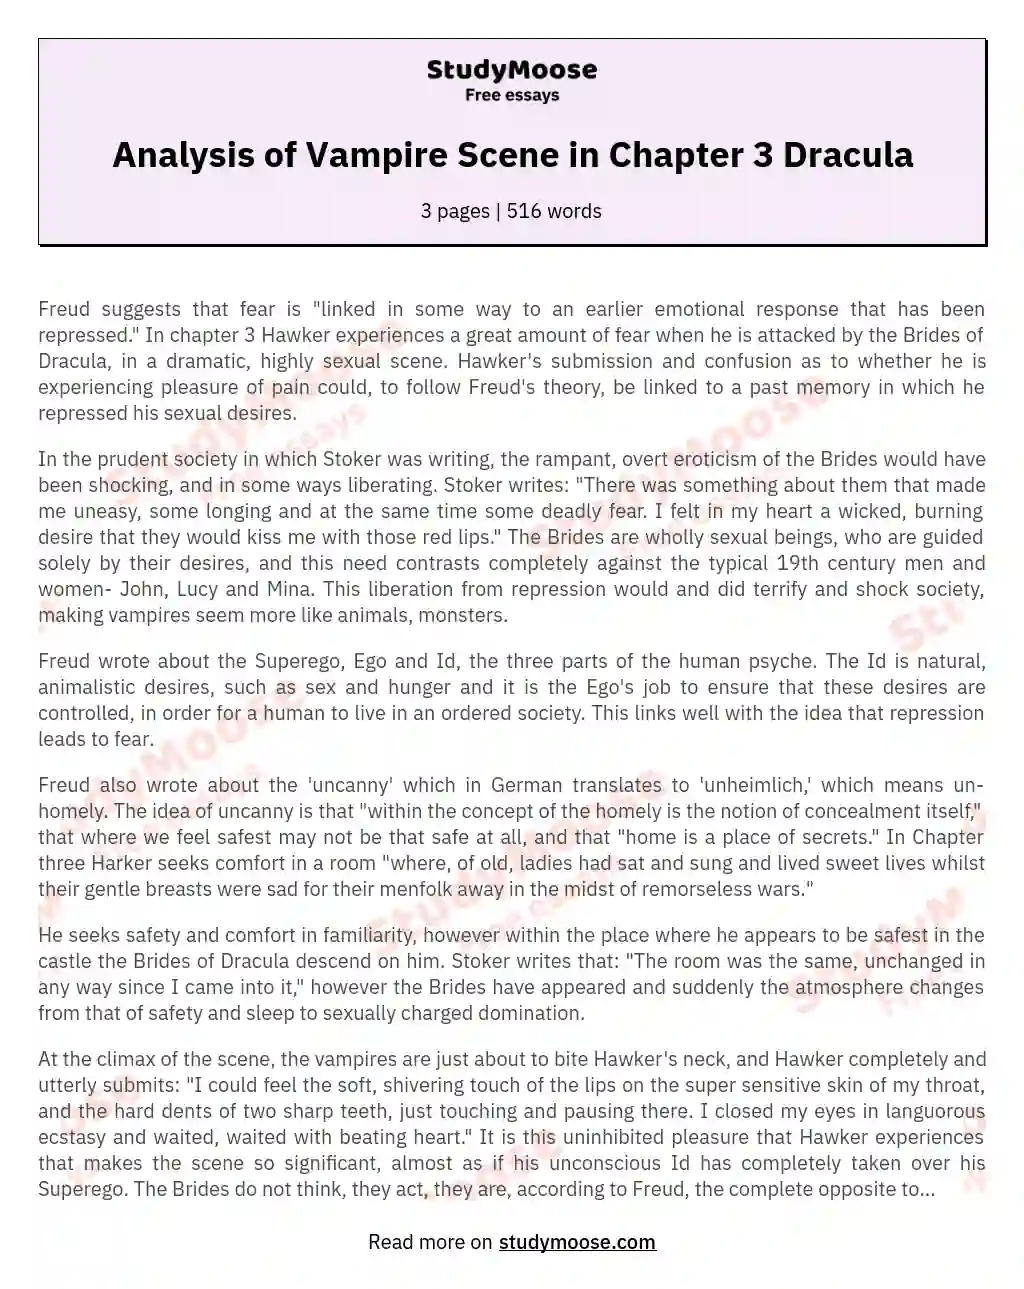 Analysis of Vampire Scene in Chapter 3 Dracula essay